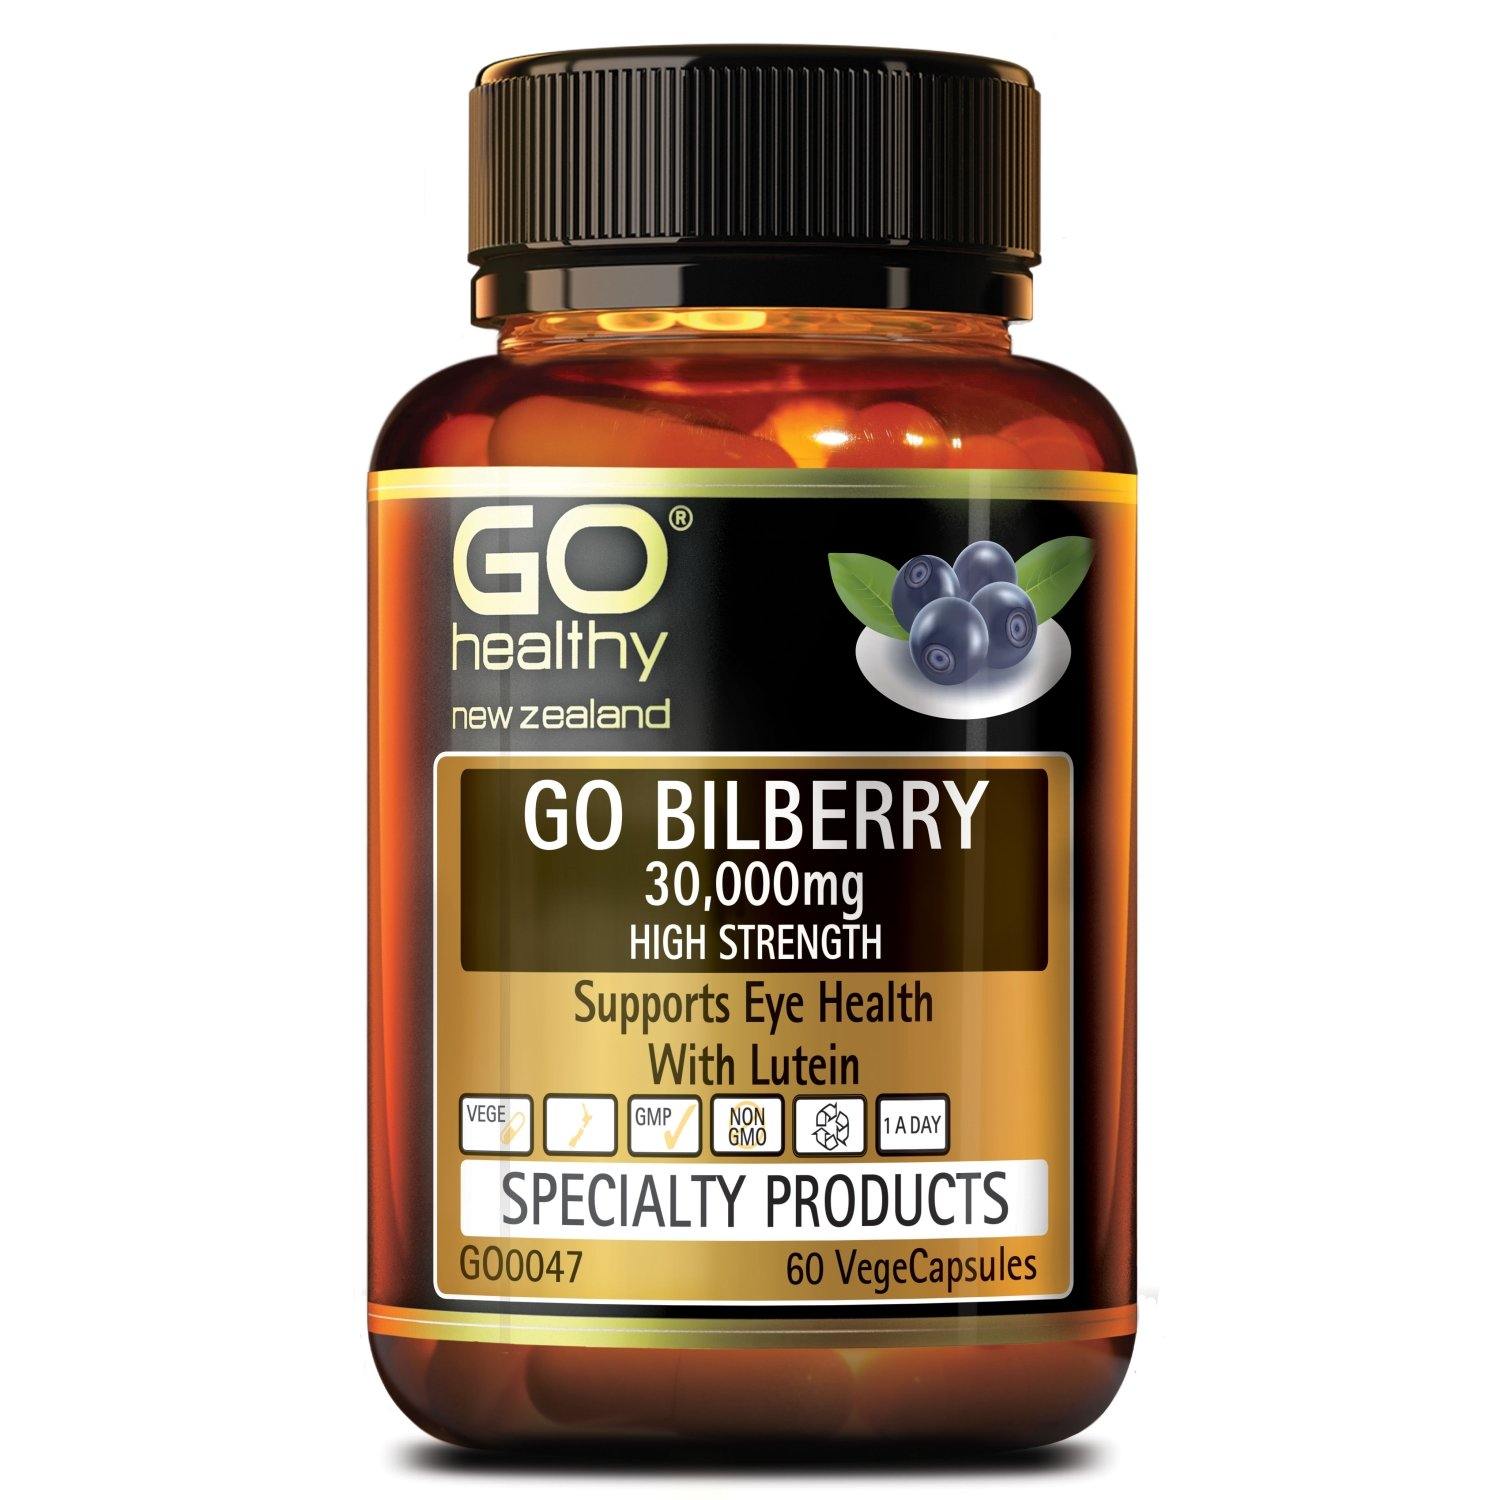 Buy 3 Get 1 Free - Go Healthy Bilberry 30,000mg 60 vege capsules - Ingredient: Bilberry, nz made, Price  $150-$500, Specials, Vendor  Go Healthy - Aotea Wellness